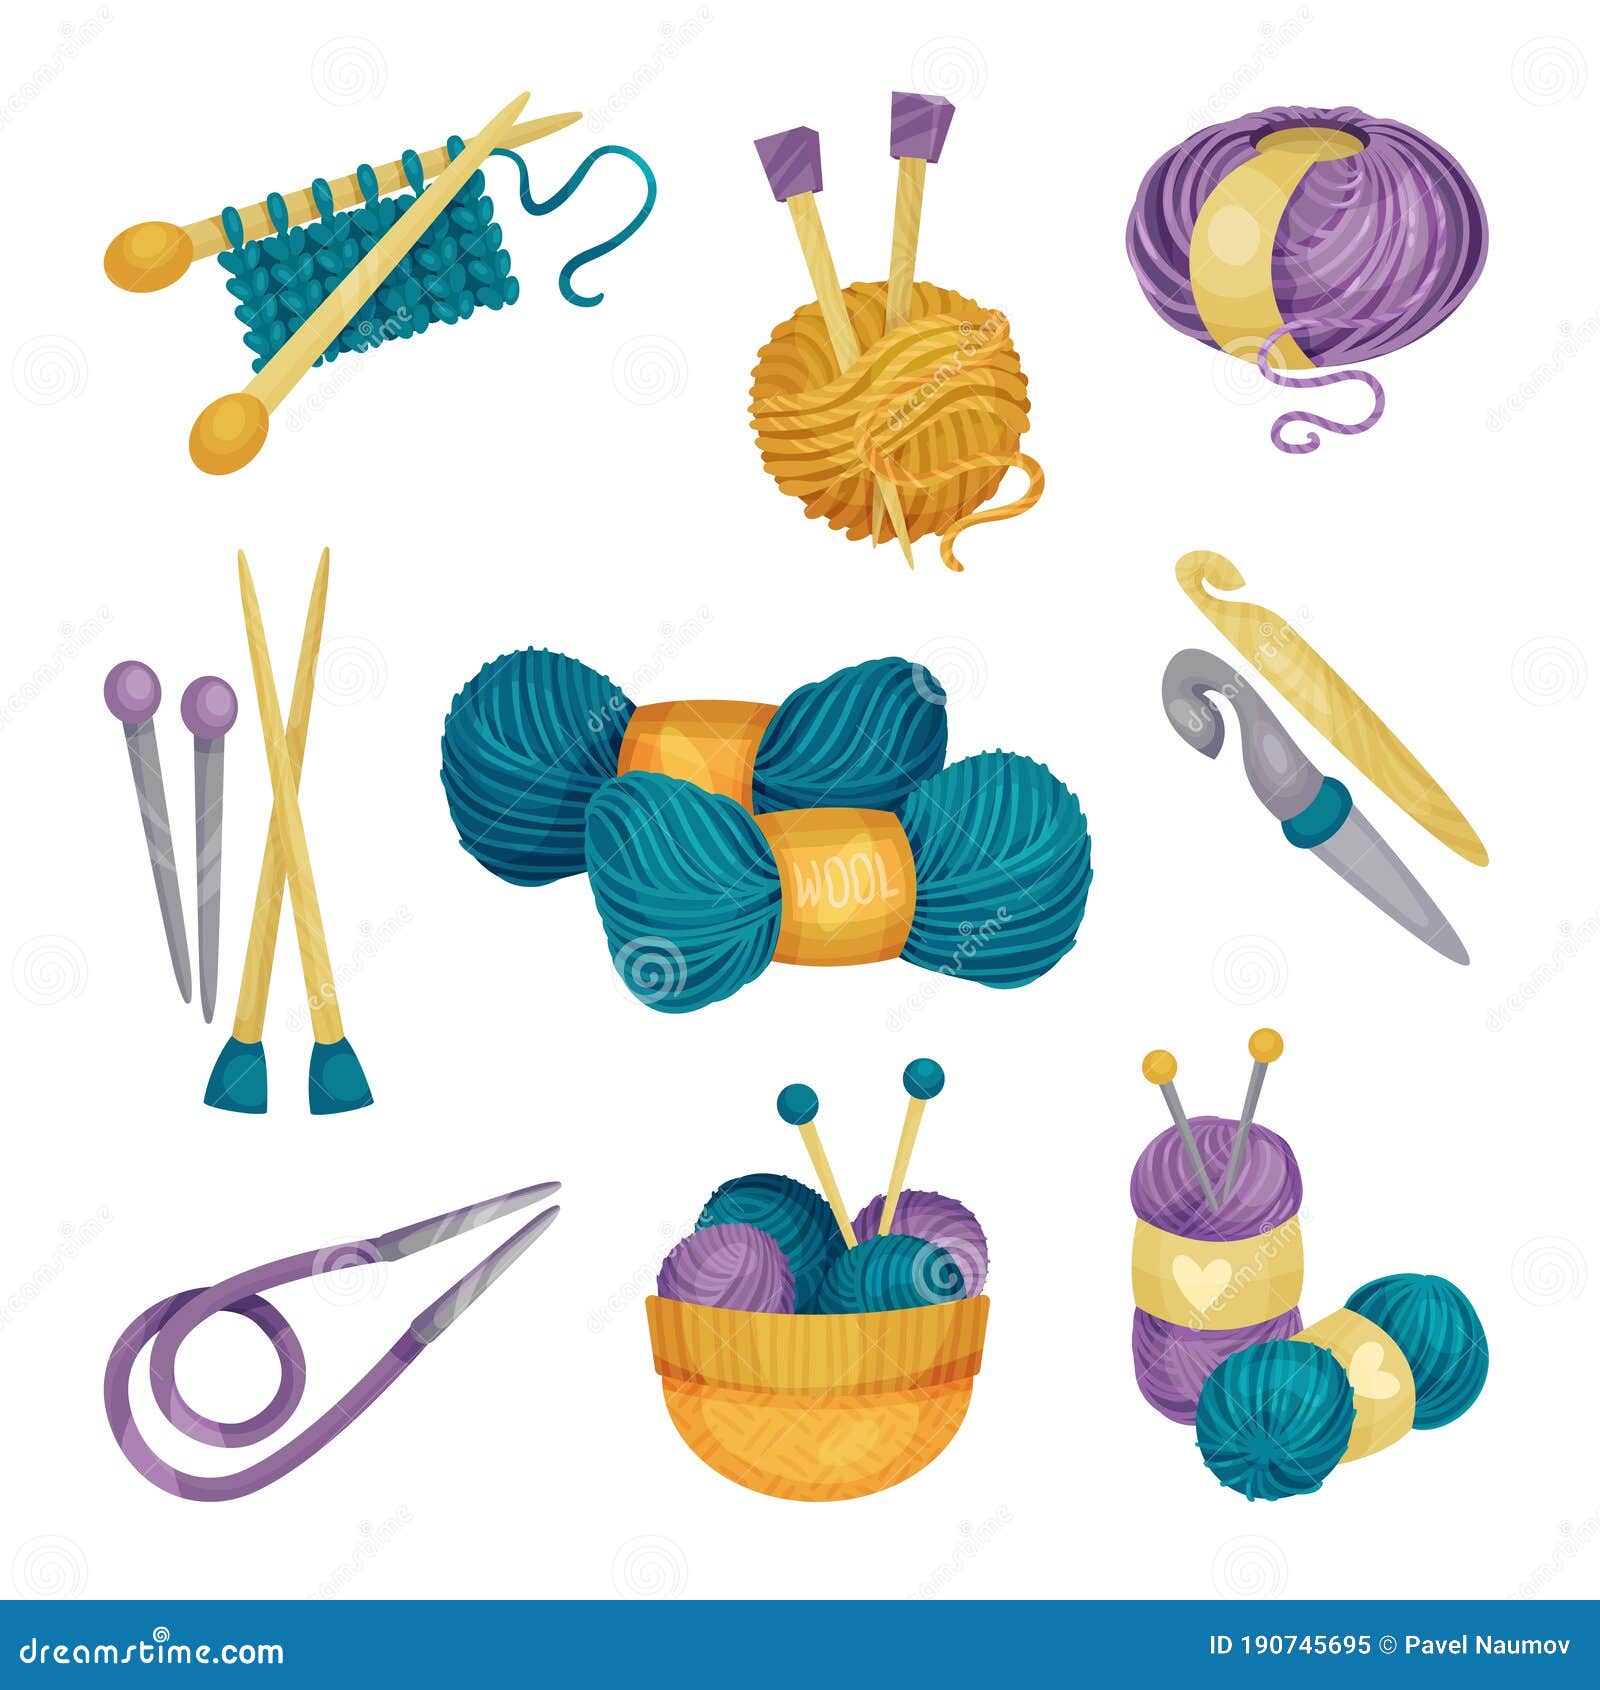 Crewel or Wool Balls and Knitting Needle or Knitting Pin As Needlework ...